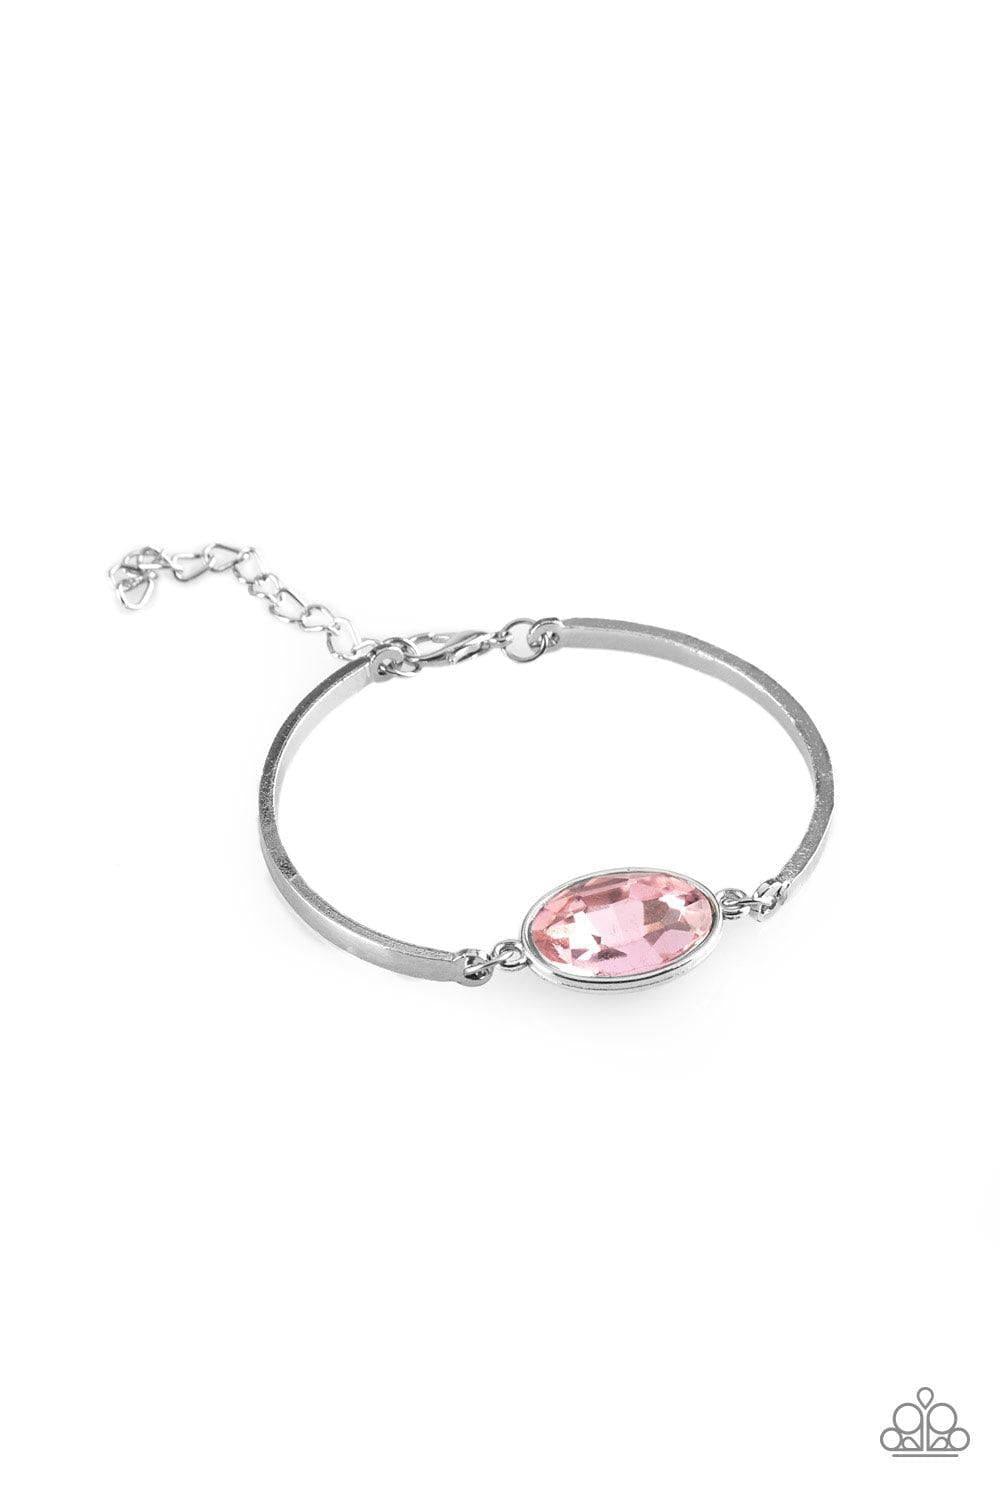 Paparazzi Accessories - Definitely Dashing - Pink Bracelet - Bling by JessieK